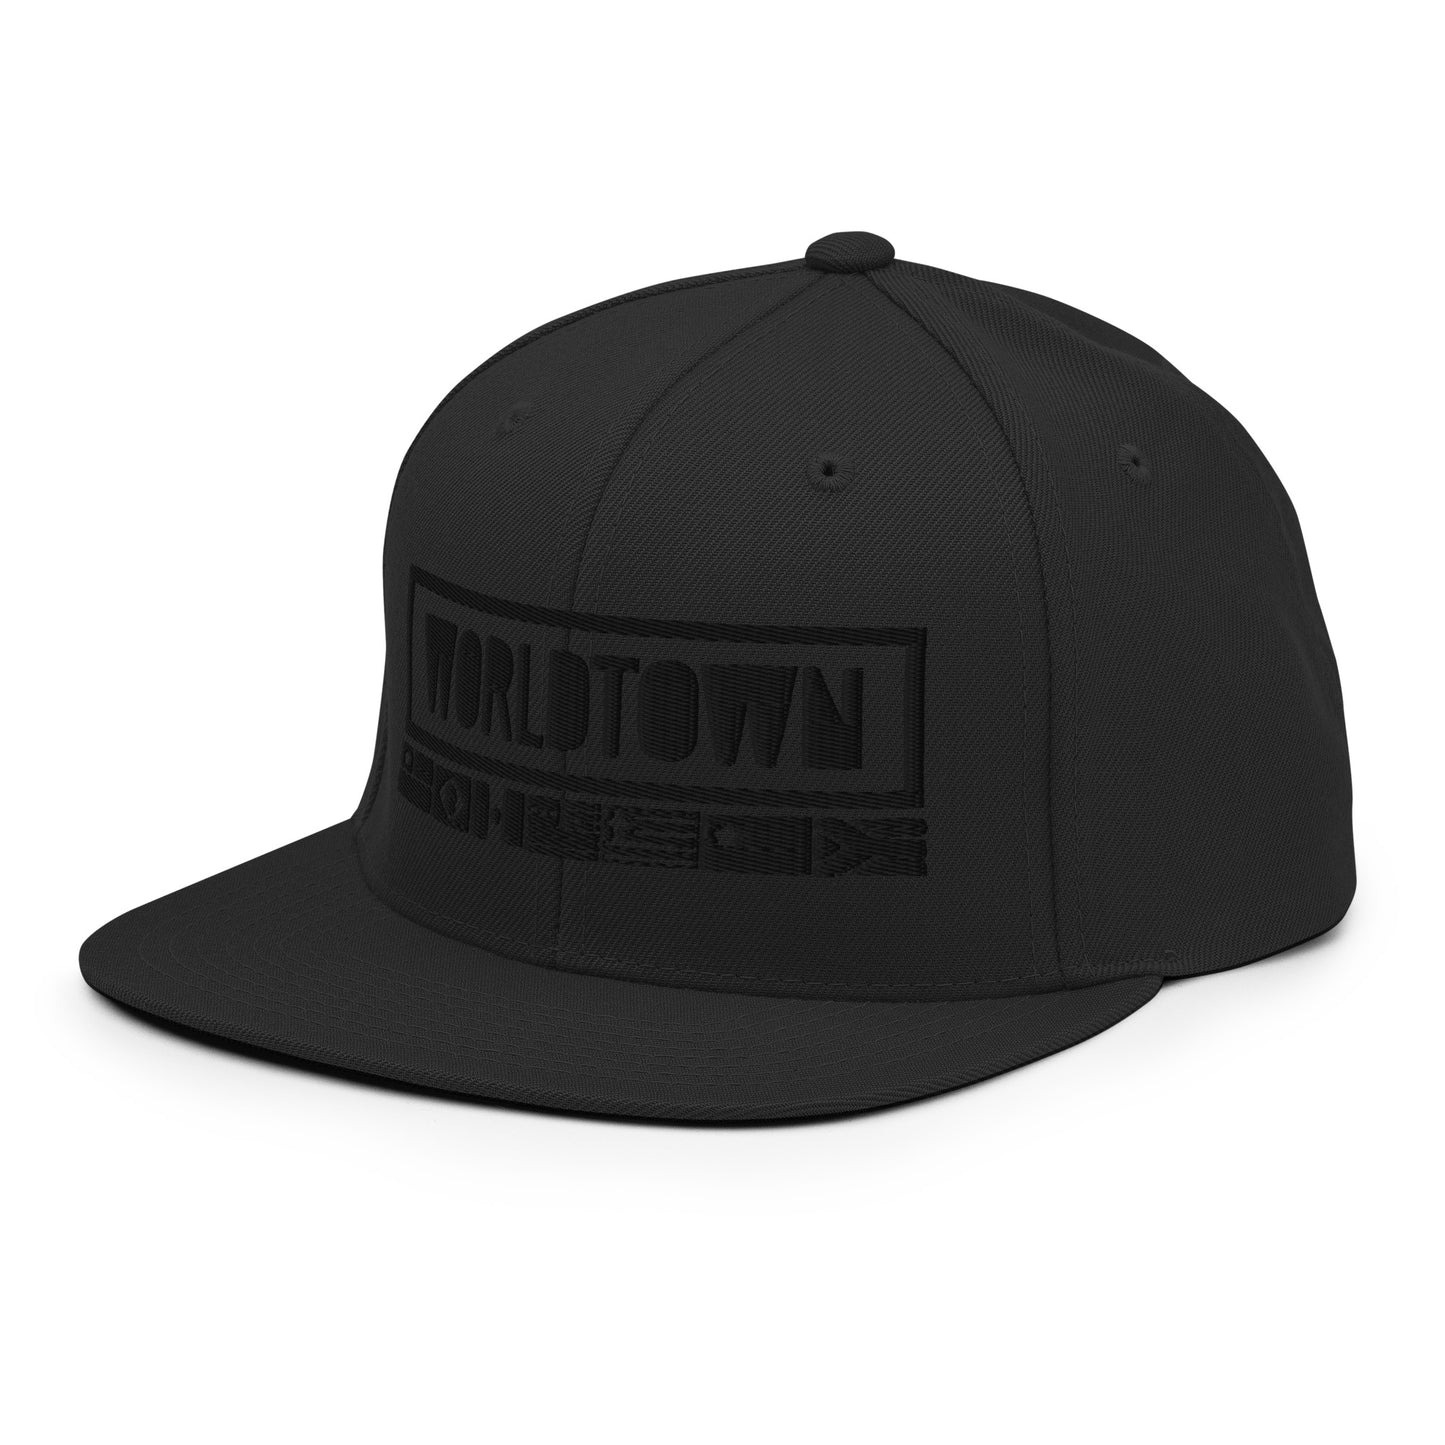 Worldtown Classic Black on Black Embroidered Snapback Hat